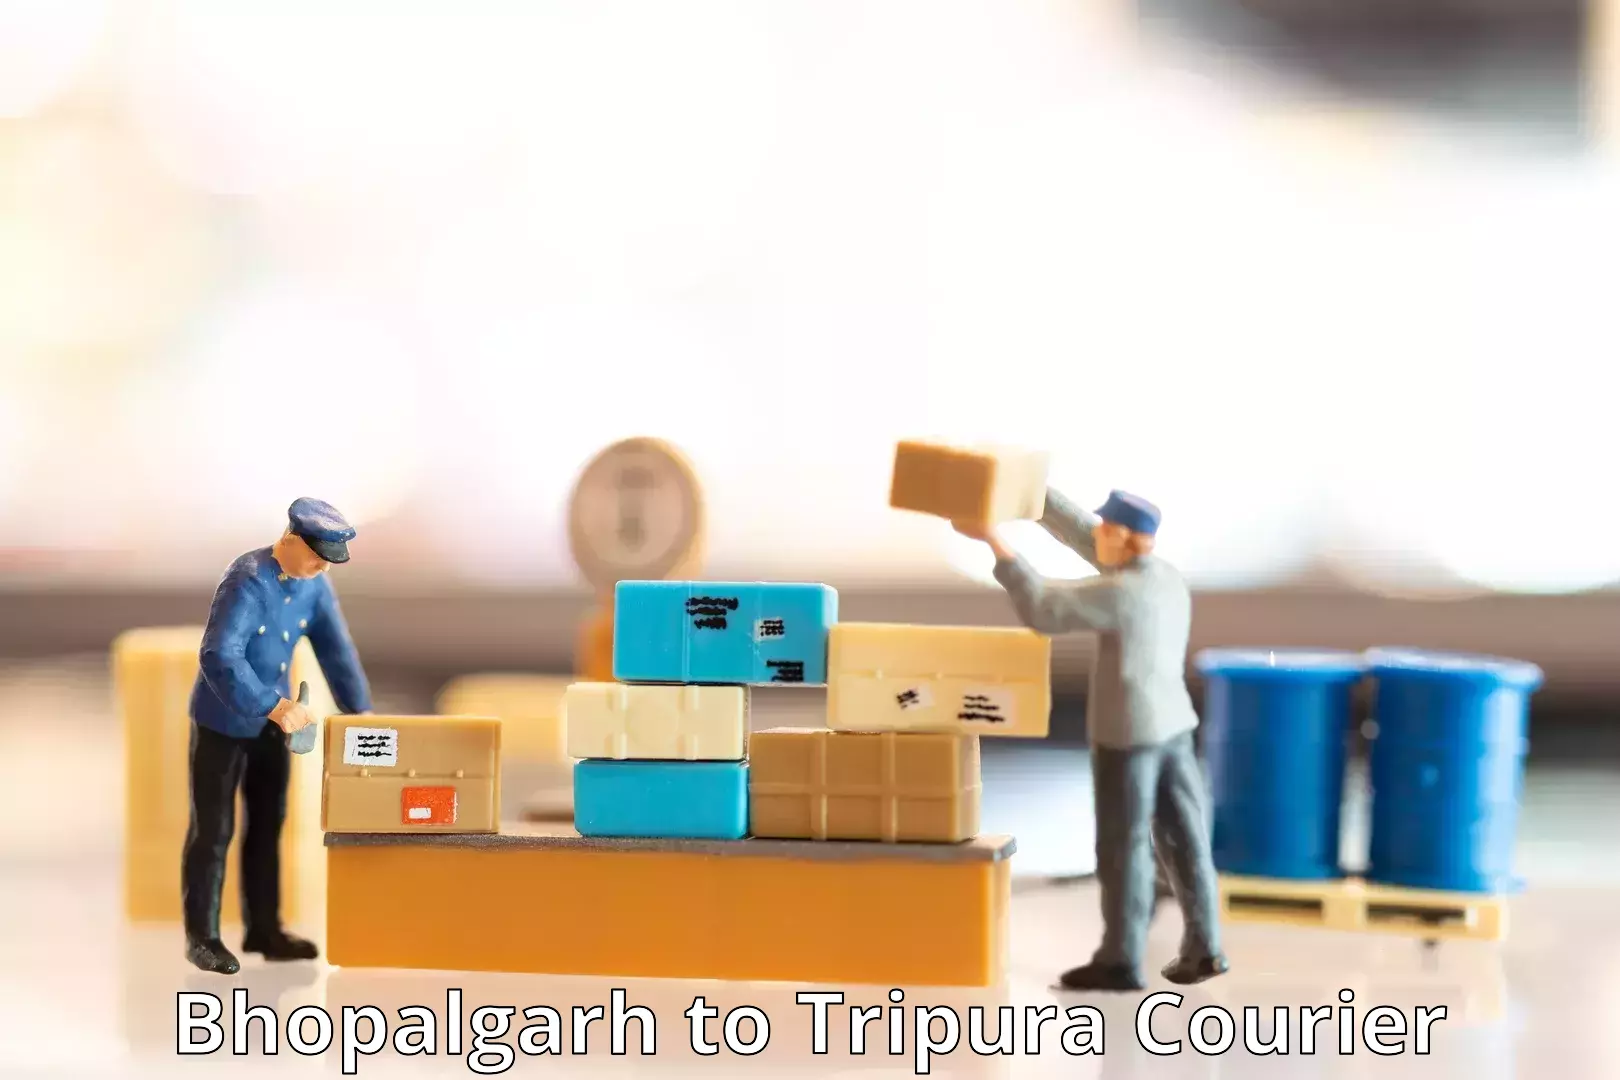 Courier service comparison Bhopalgarh to West Tripura